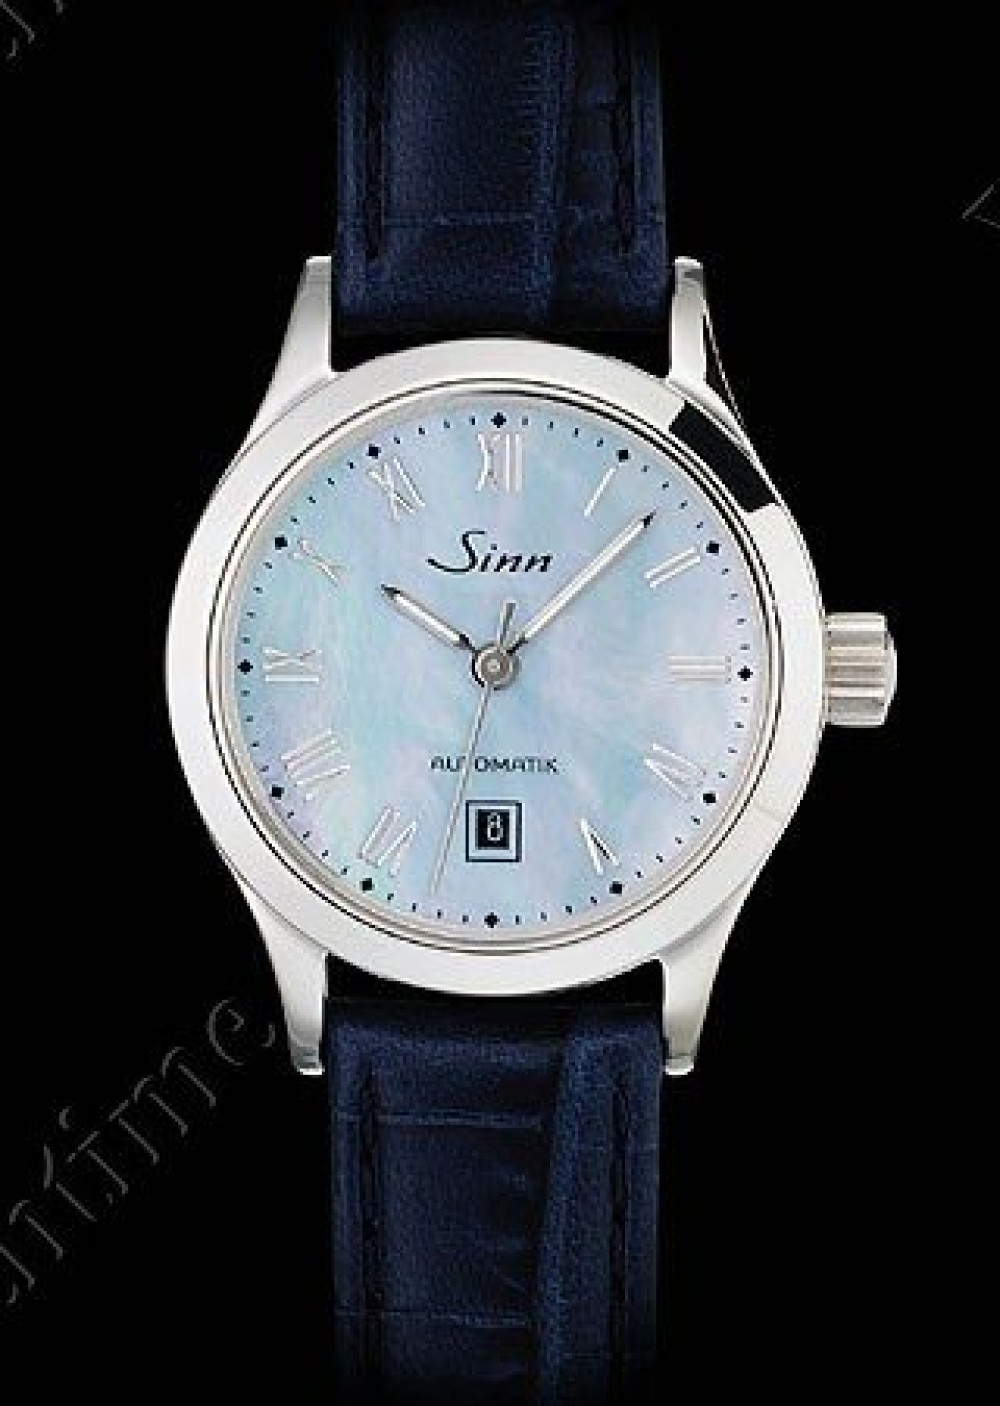 Zegarek firmy Sinn, model 456 St Perlmutt B